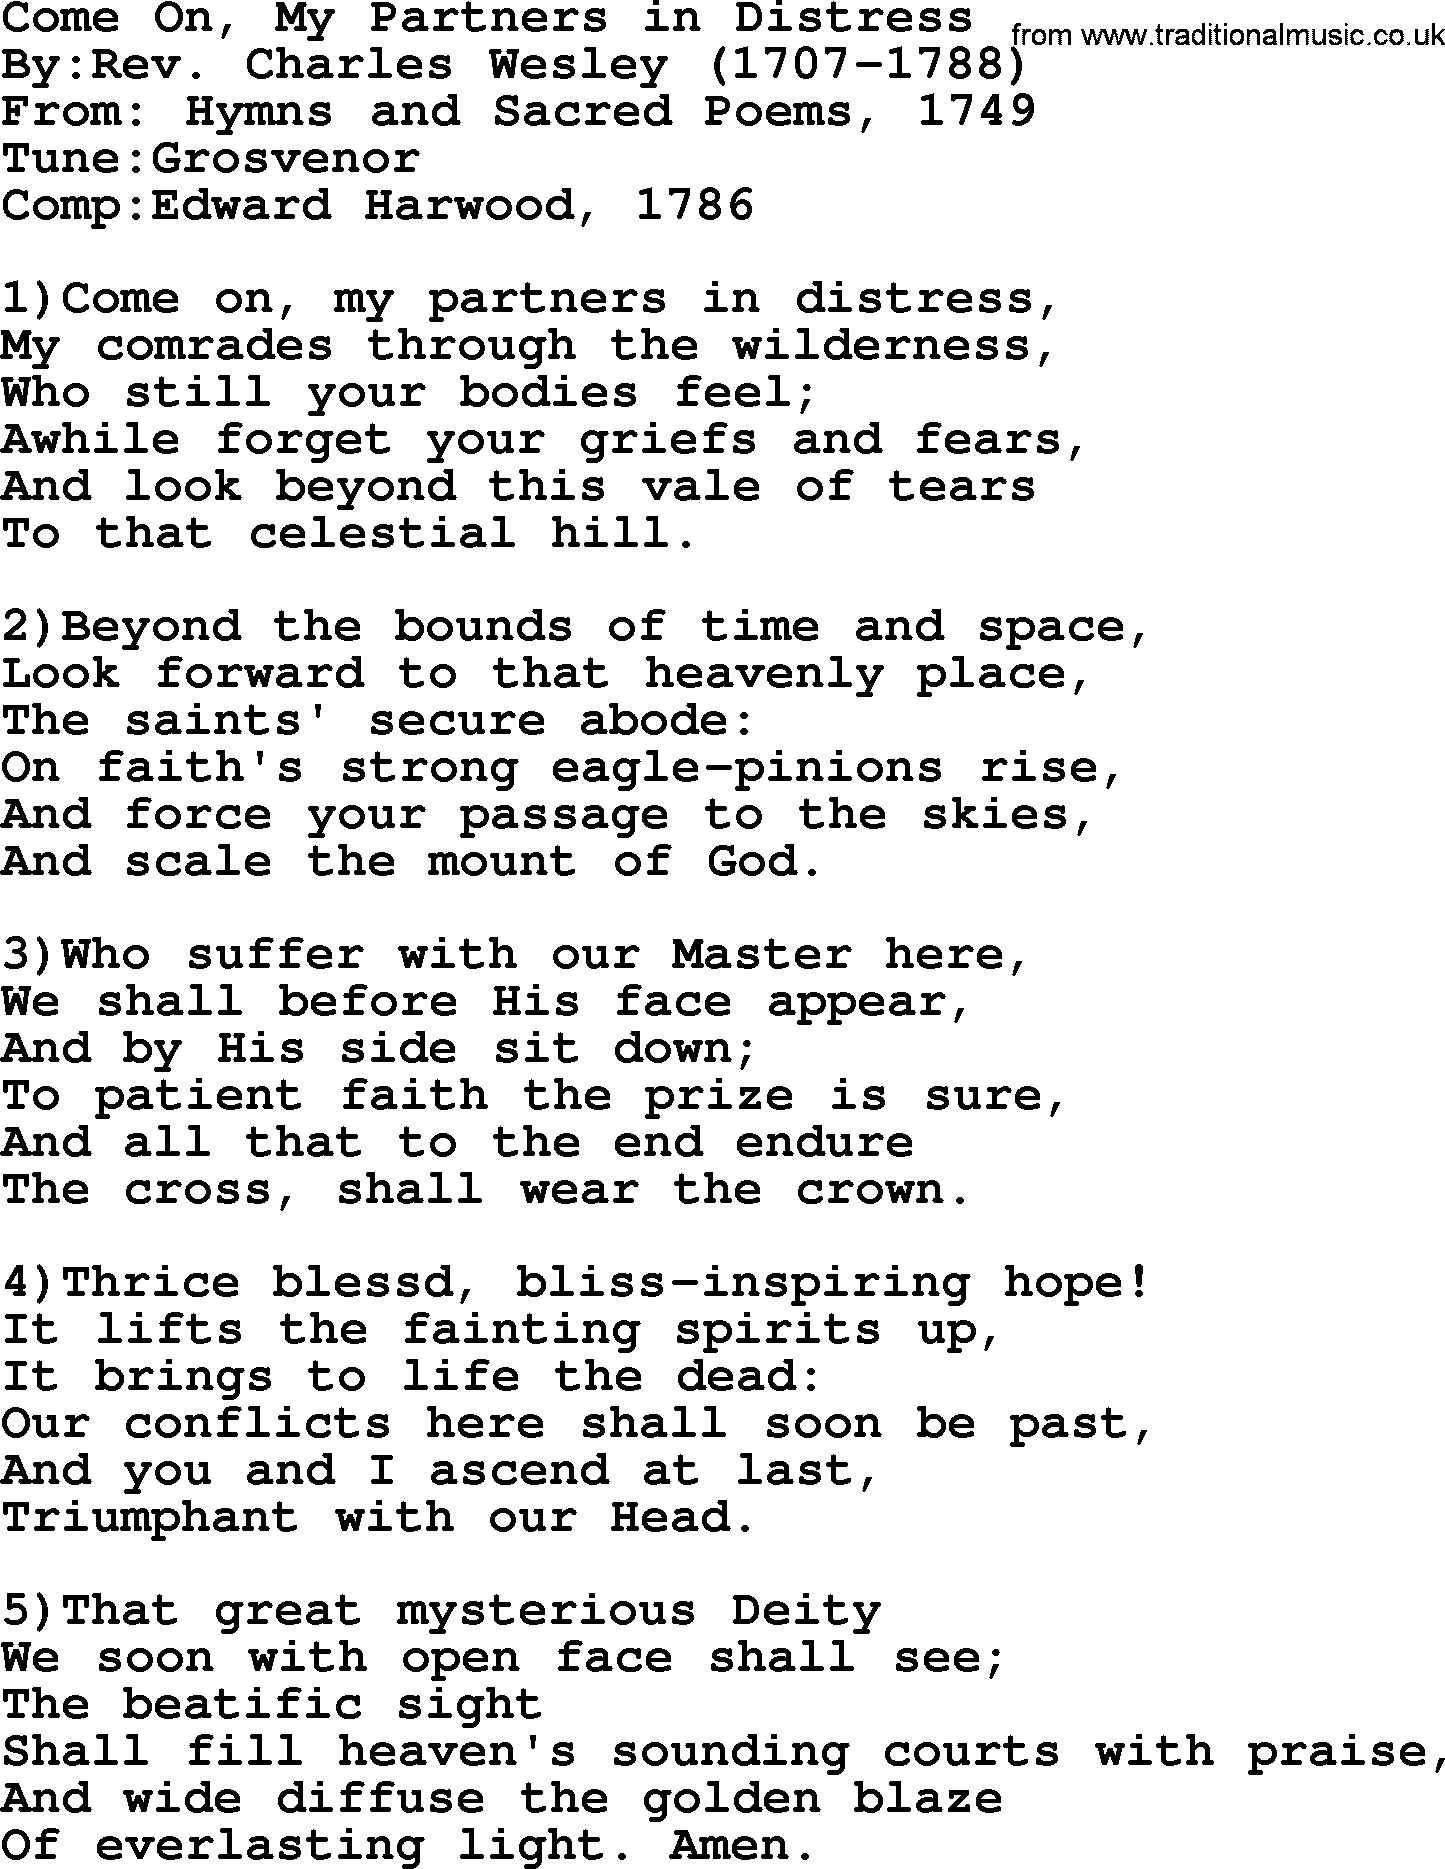 Methodist Hymn: Come On, My Partners In Distress, lyrics